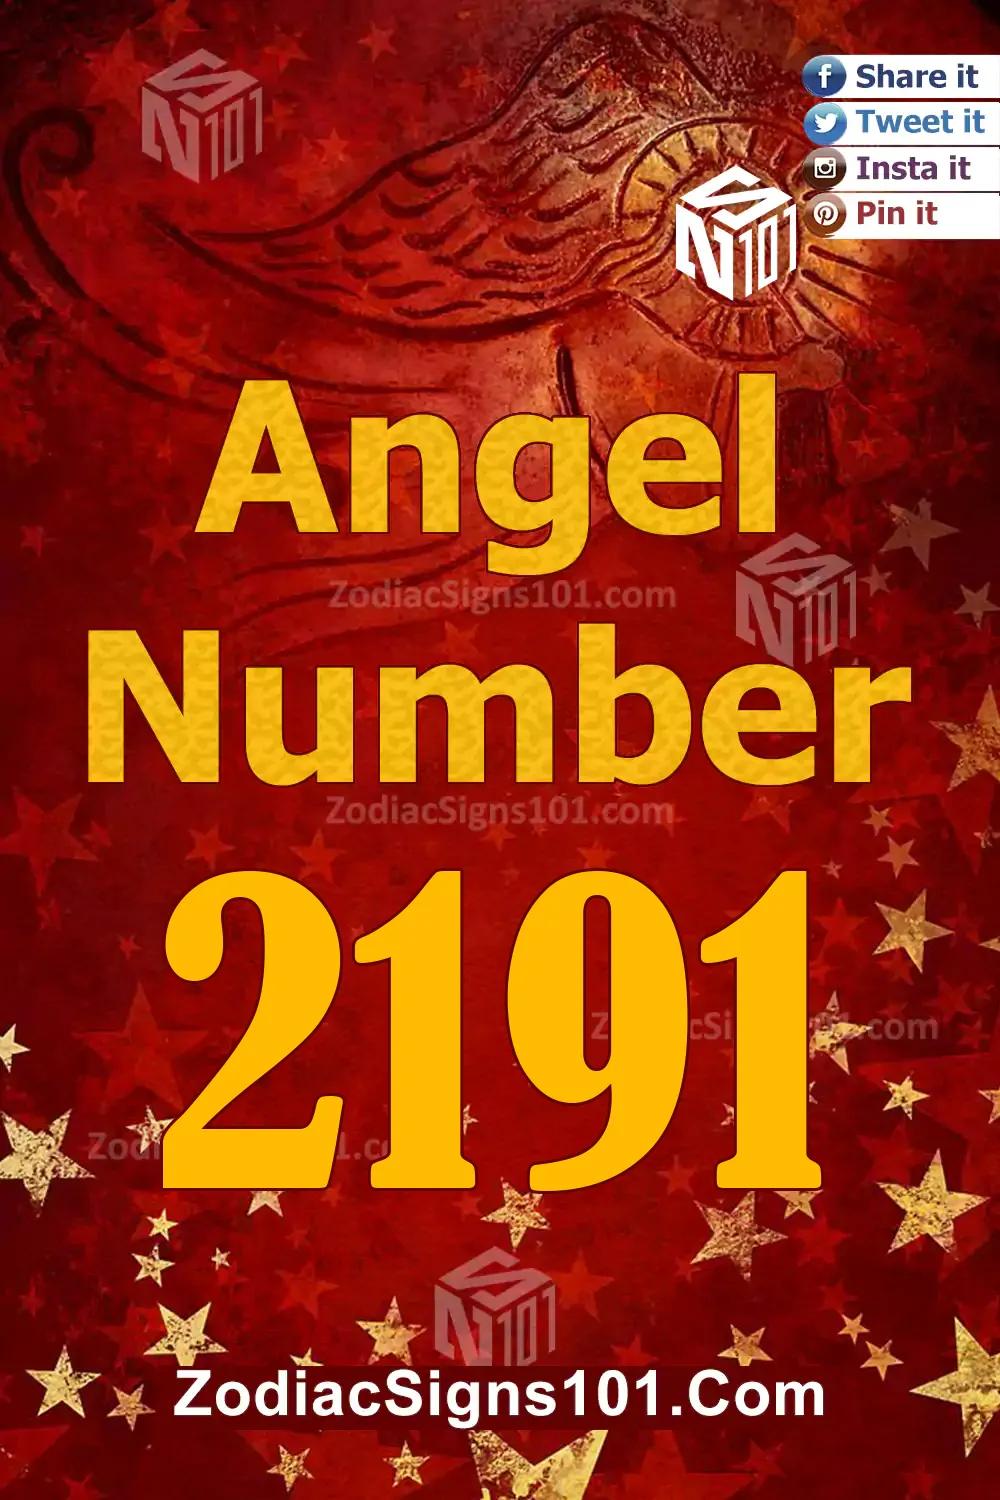 2191-Angel-Number-Meaning.jpg